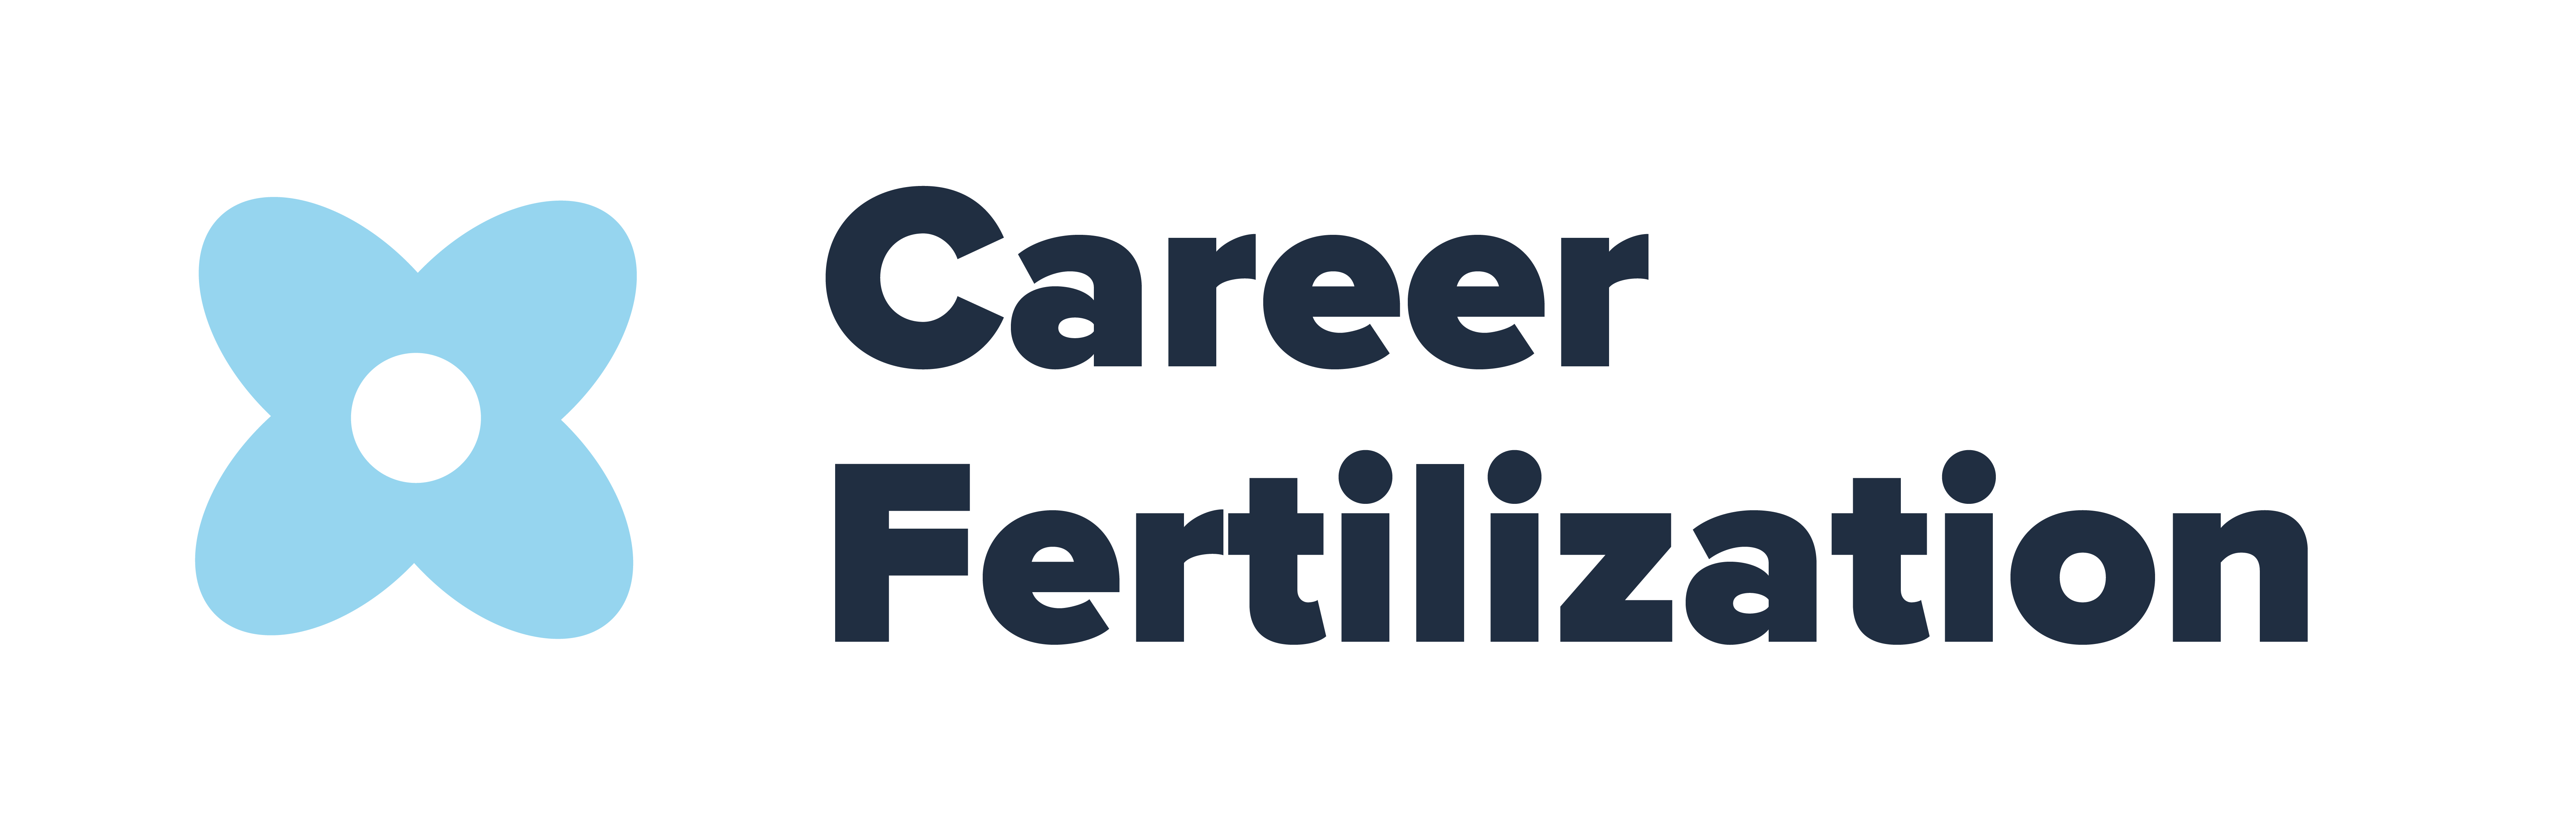 Career Fertilization